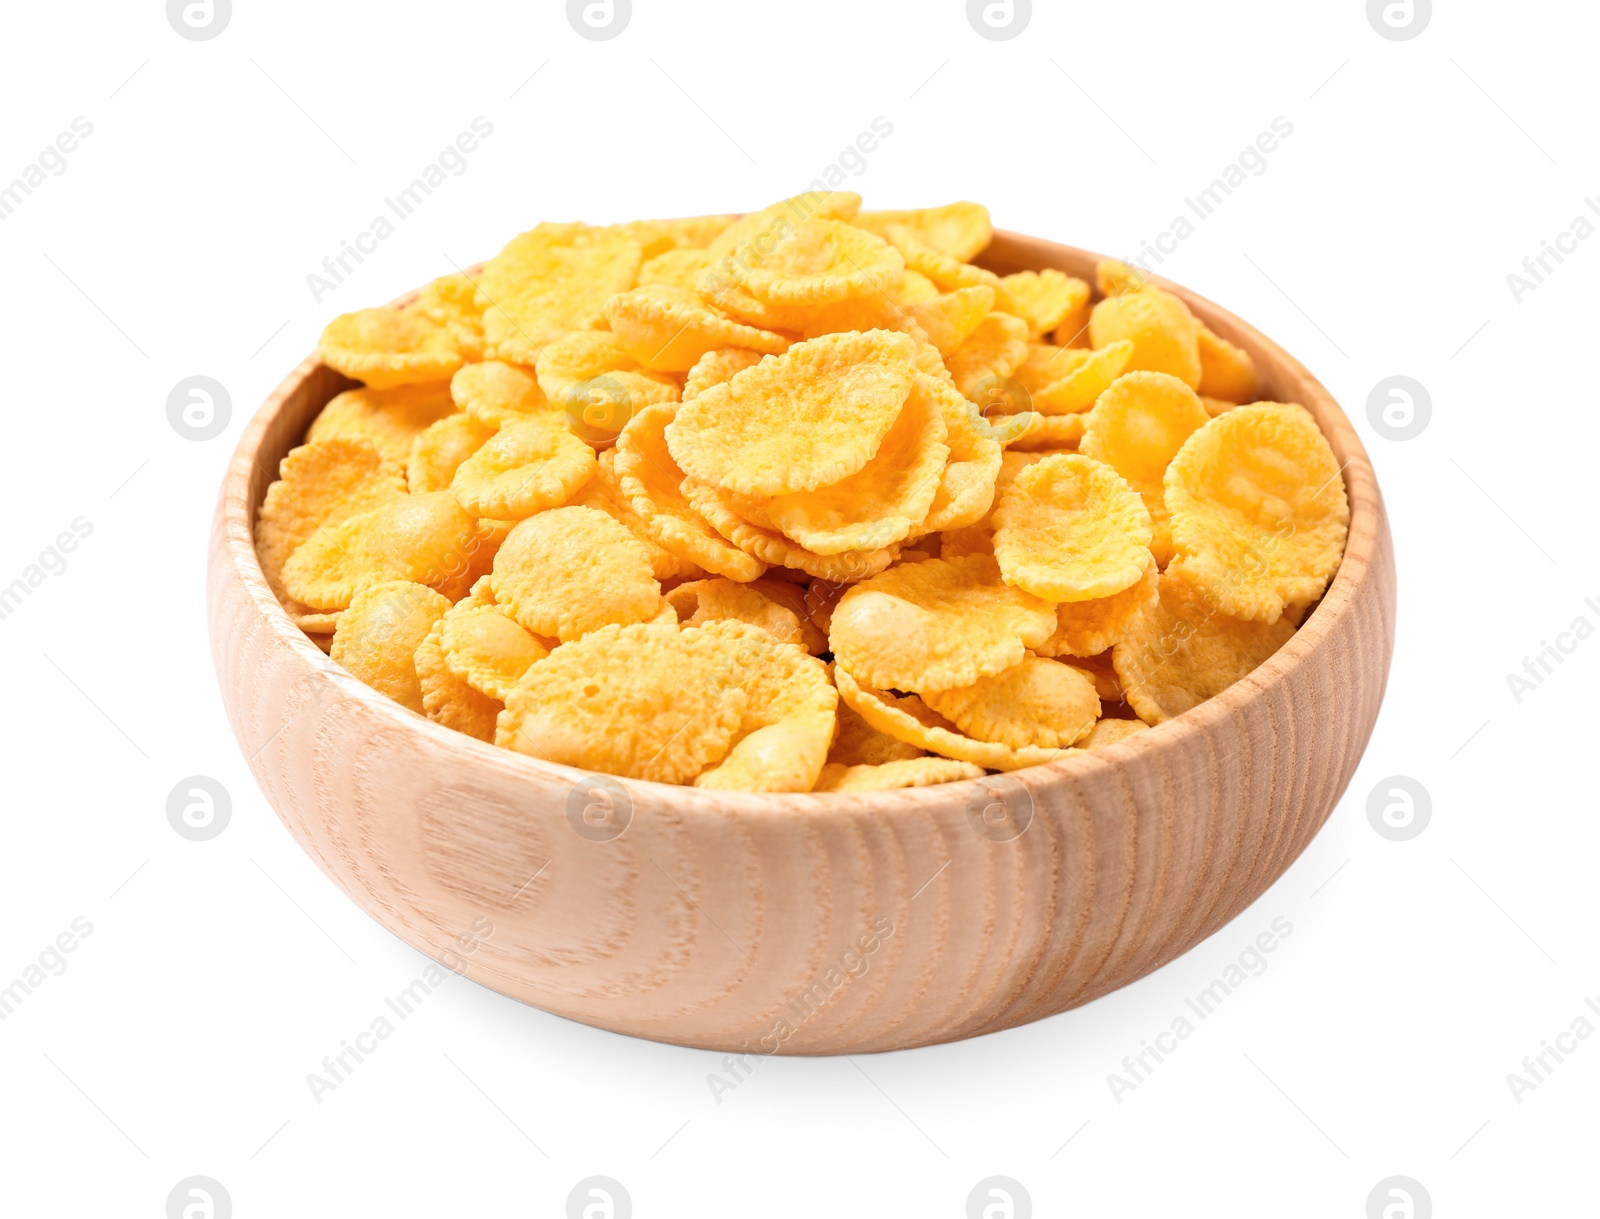 Photo of Bowl of tasty corn flakes on white background